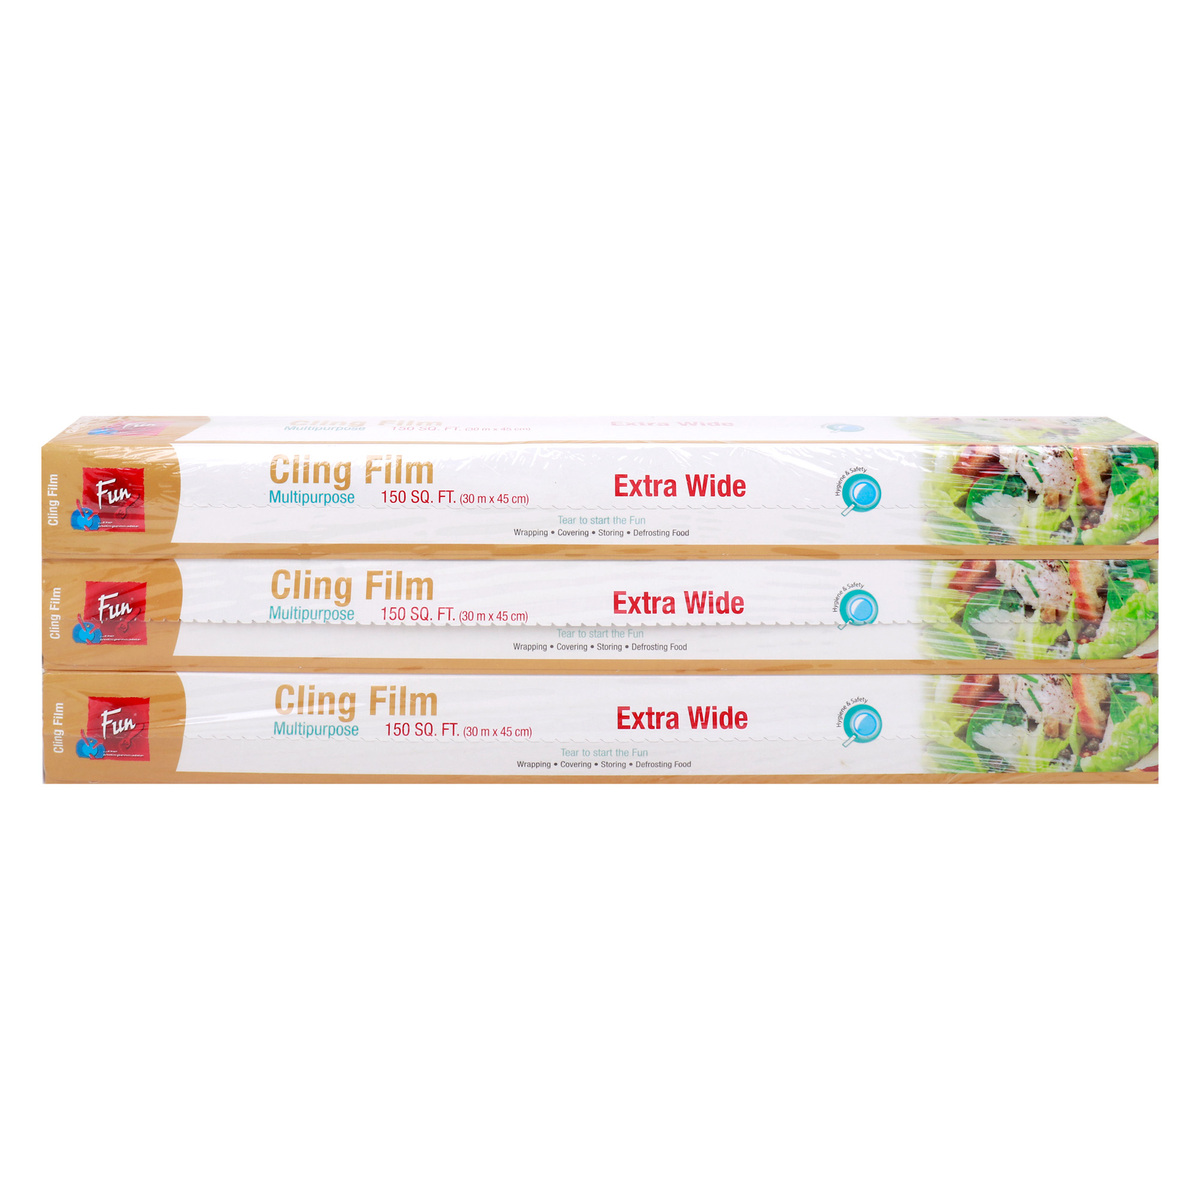 Fun Cling Film 150sq.ft. (30m x 45cm) Value Pack 3 pcs